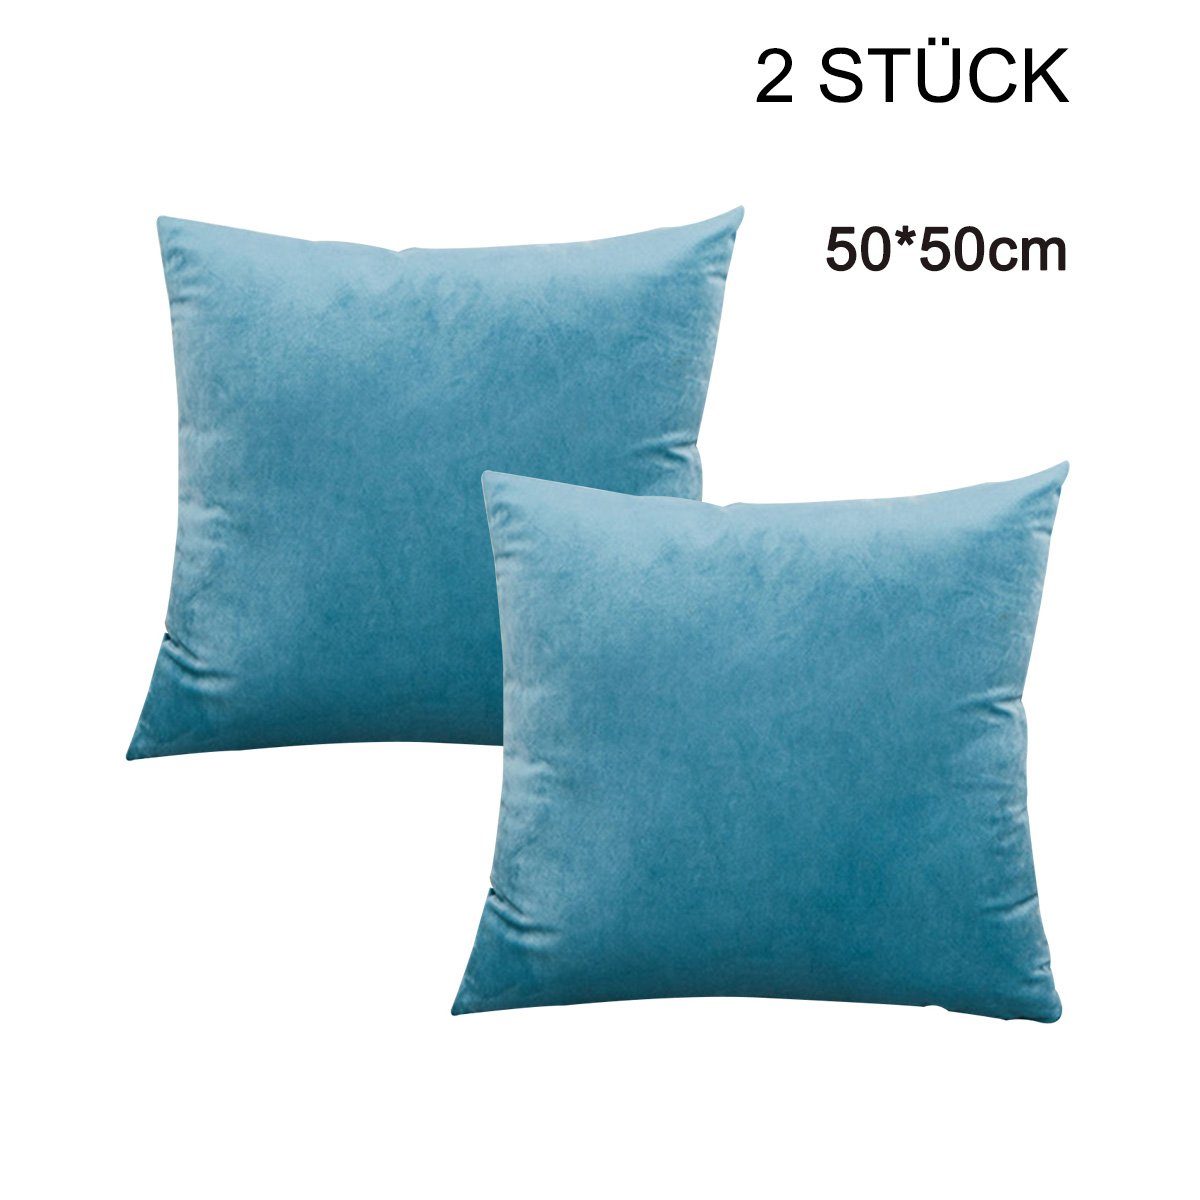 dunkelblau Sofa Fall Kissenbezug Kissen für Set Soft Kissenbezüge 45cmx45cm, Solid Houhence Dekorative